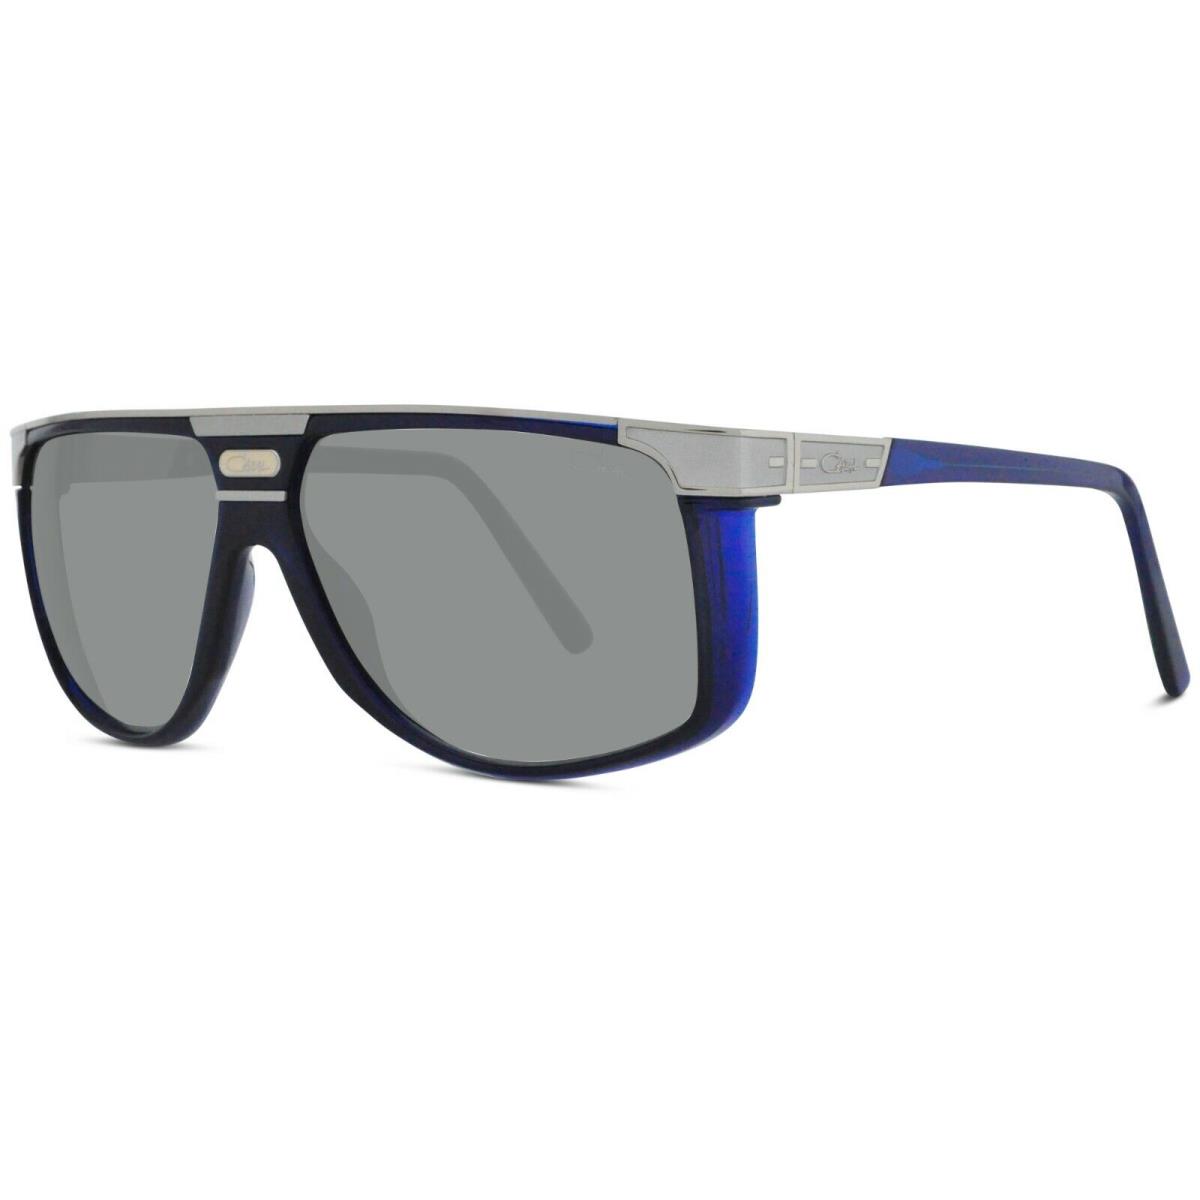 Cazal 673 Night Blue Silver/light Grey 002 Sunglasses